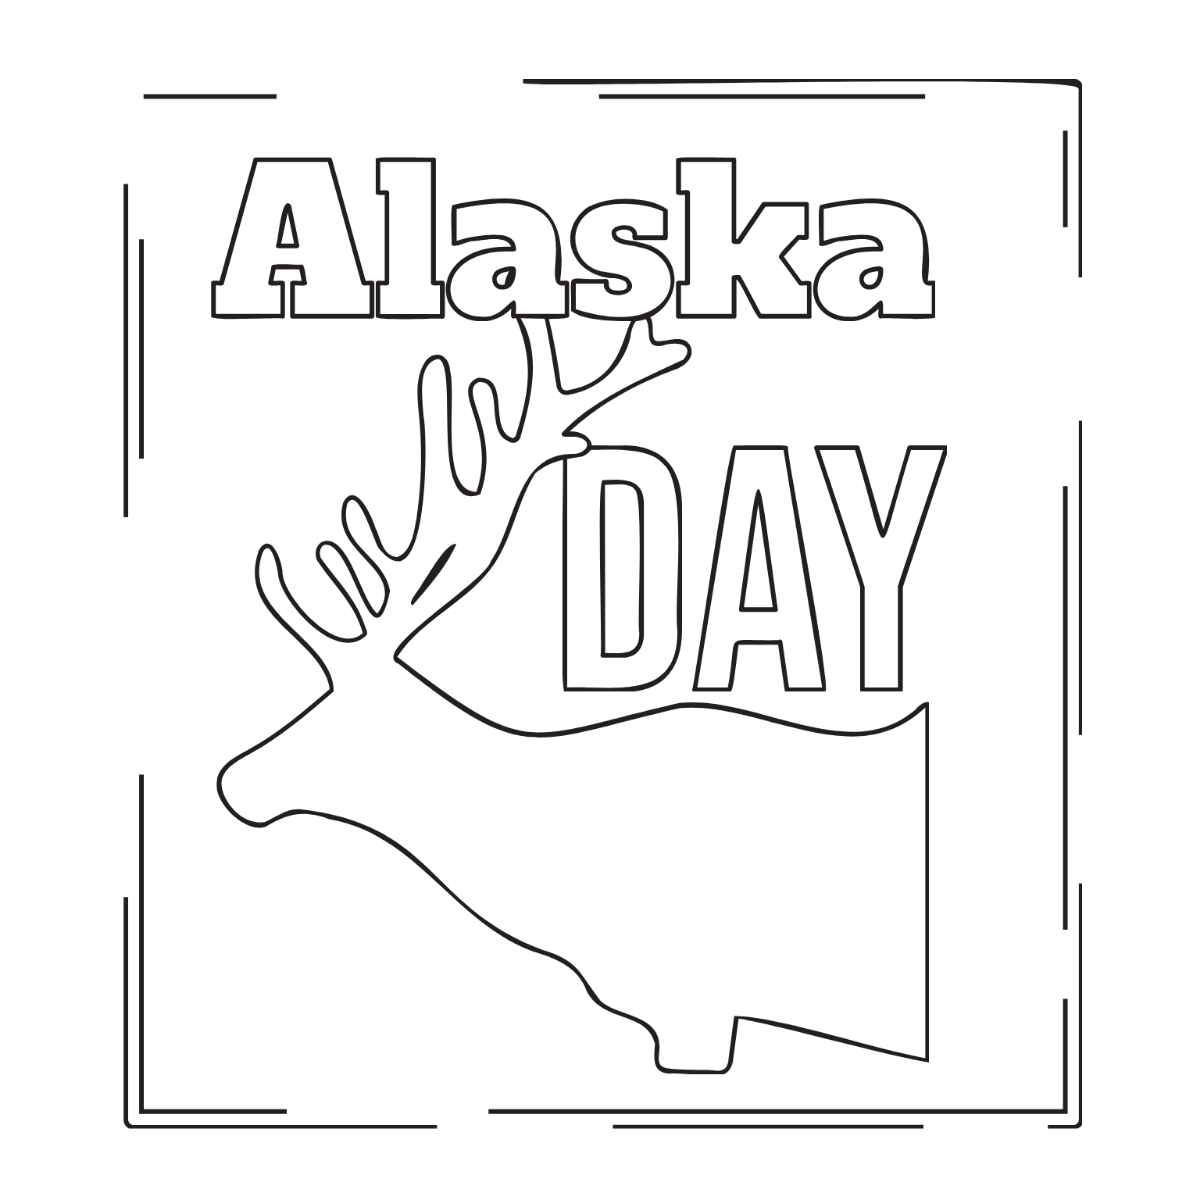 Alaska Day Drawing Vector Template